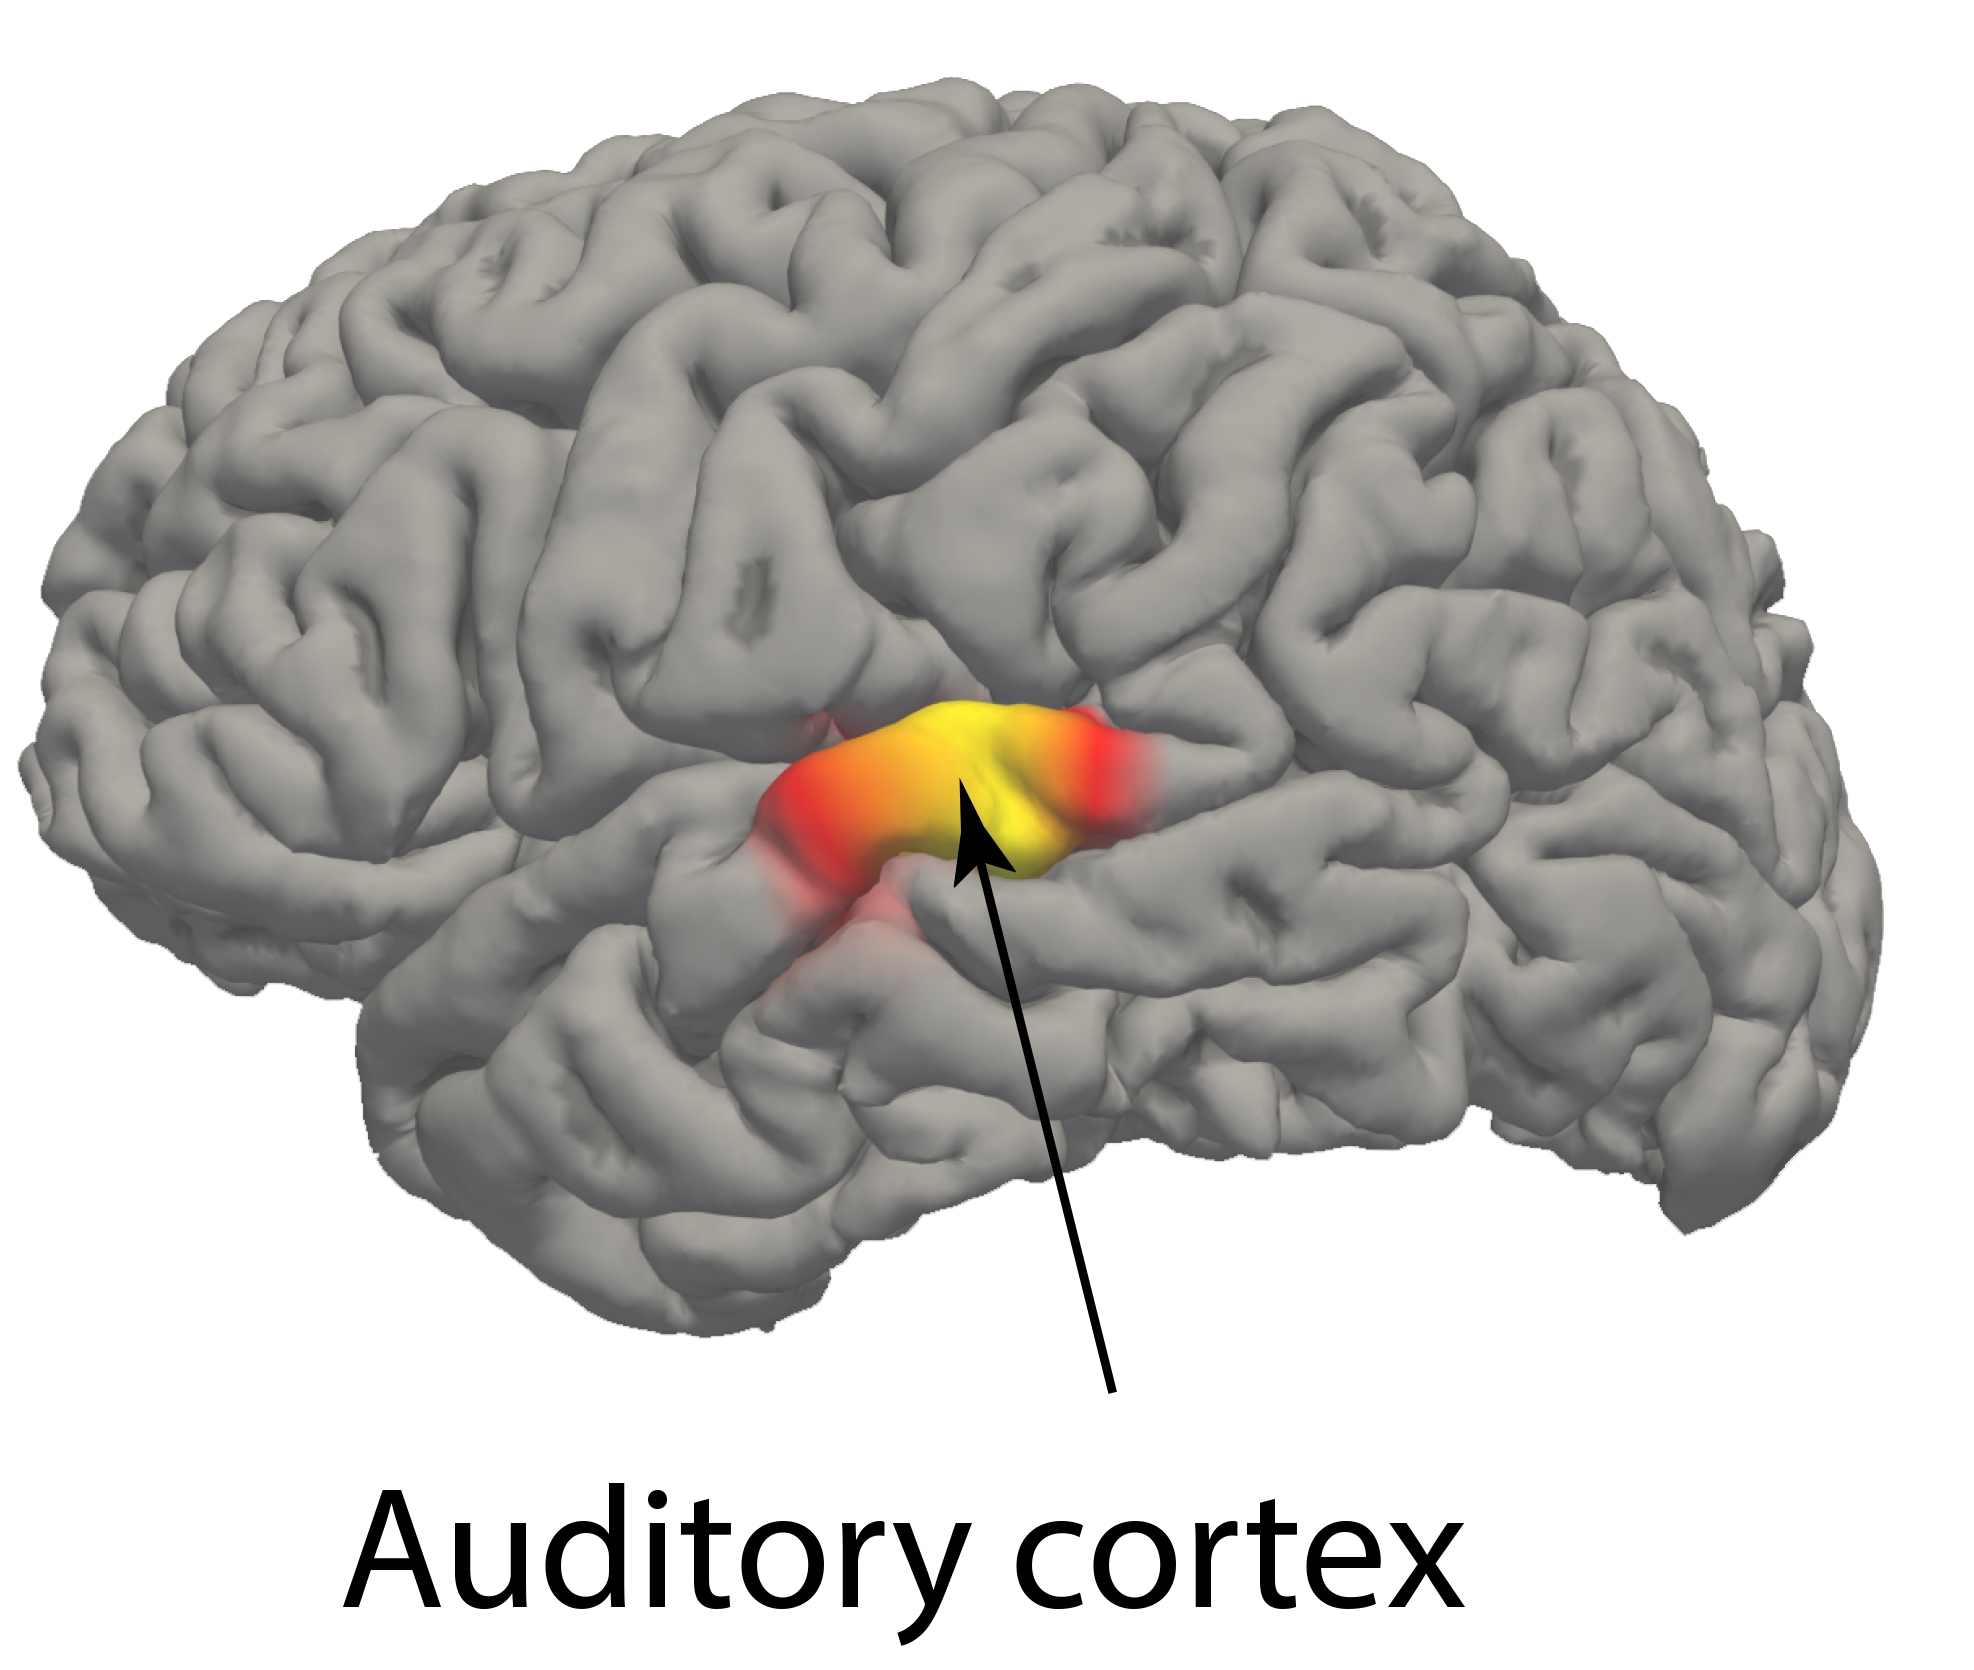 Auditory cortex